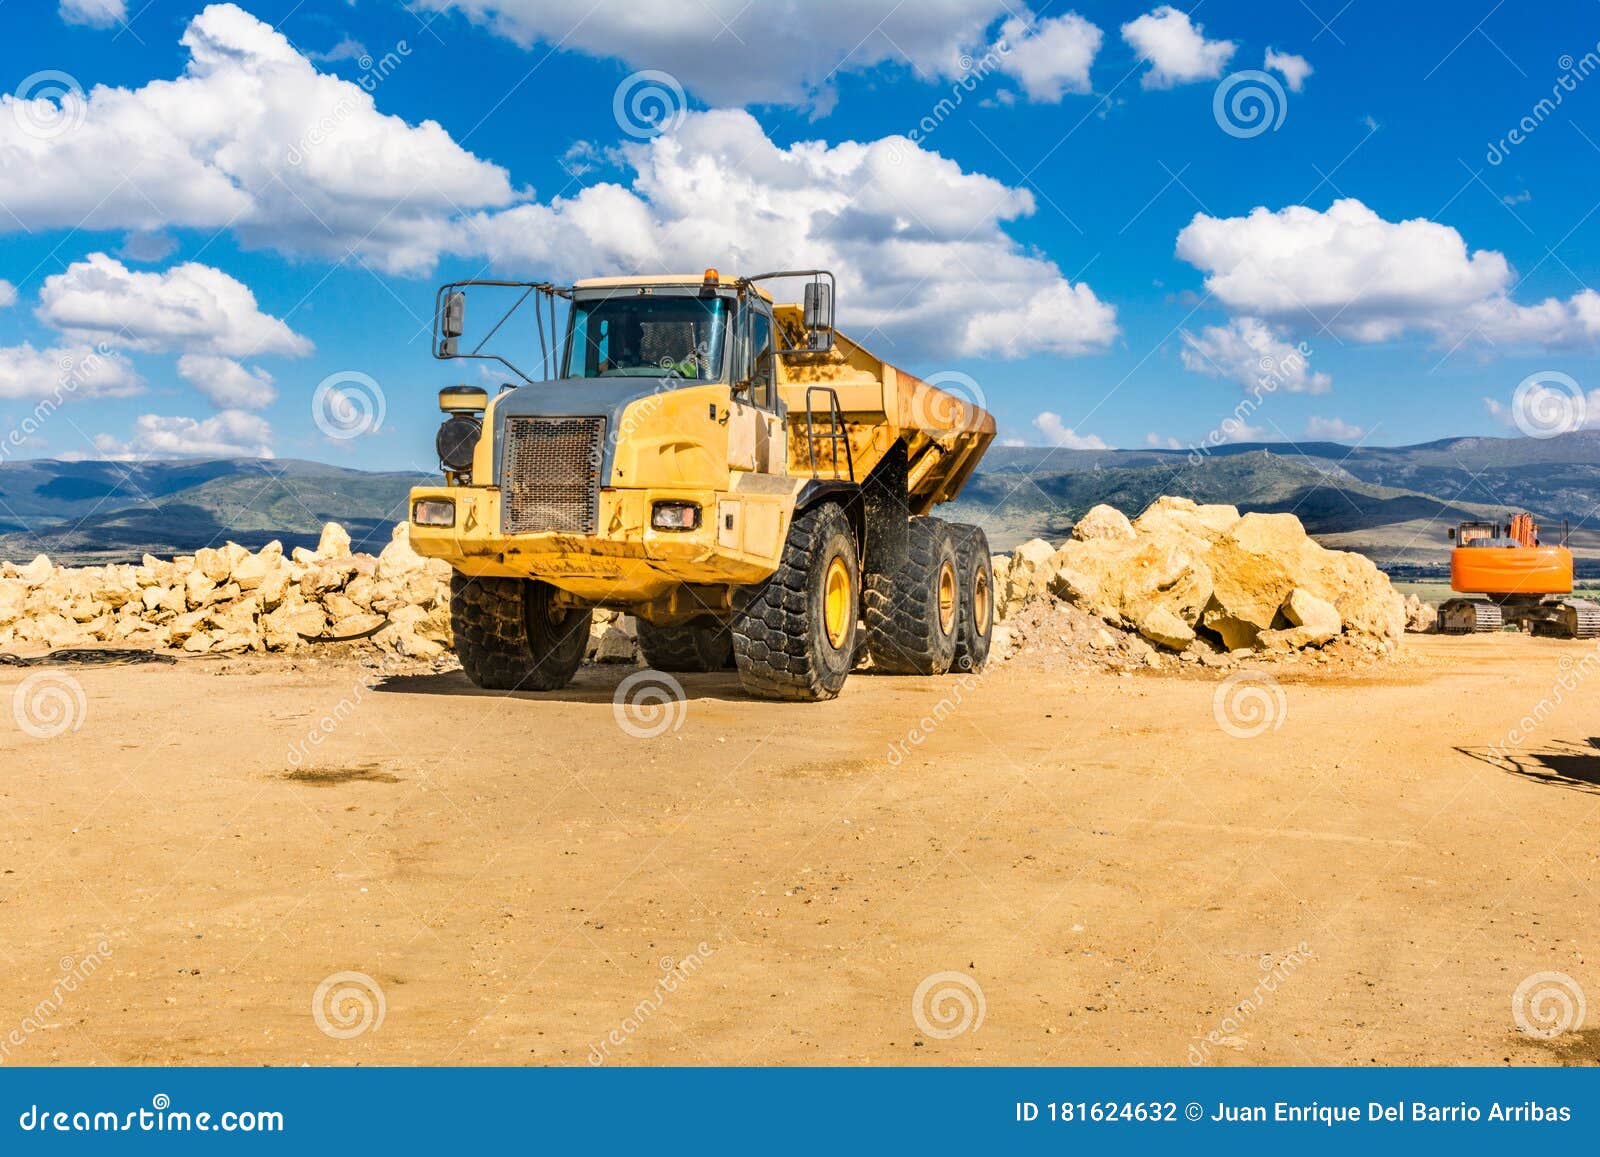 giant-truck-mine-quarry-to-transport-large-loads-181624632.jpg